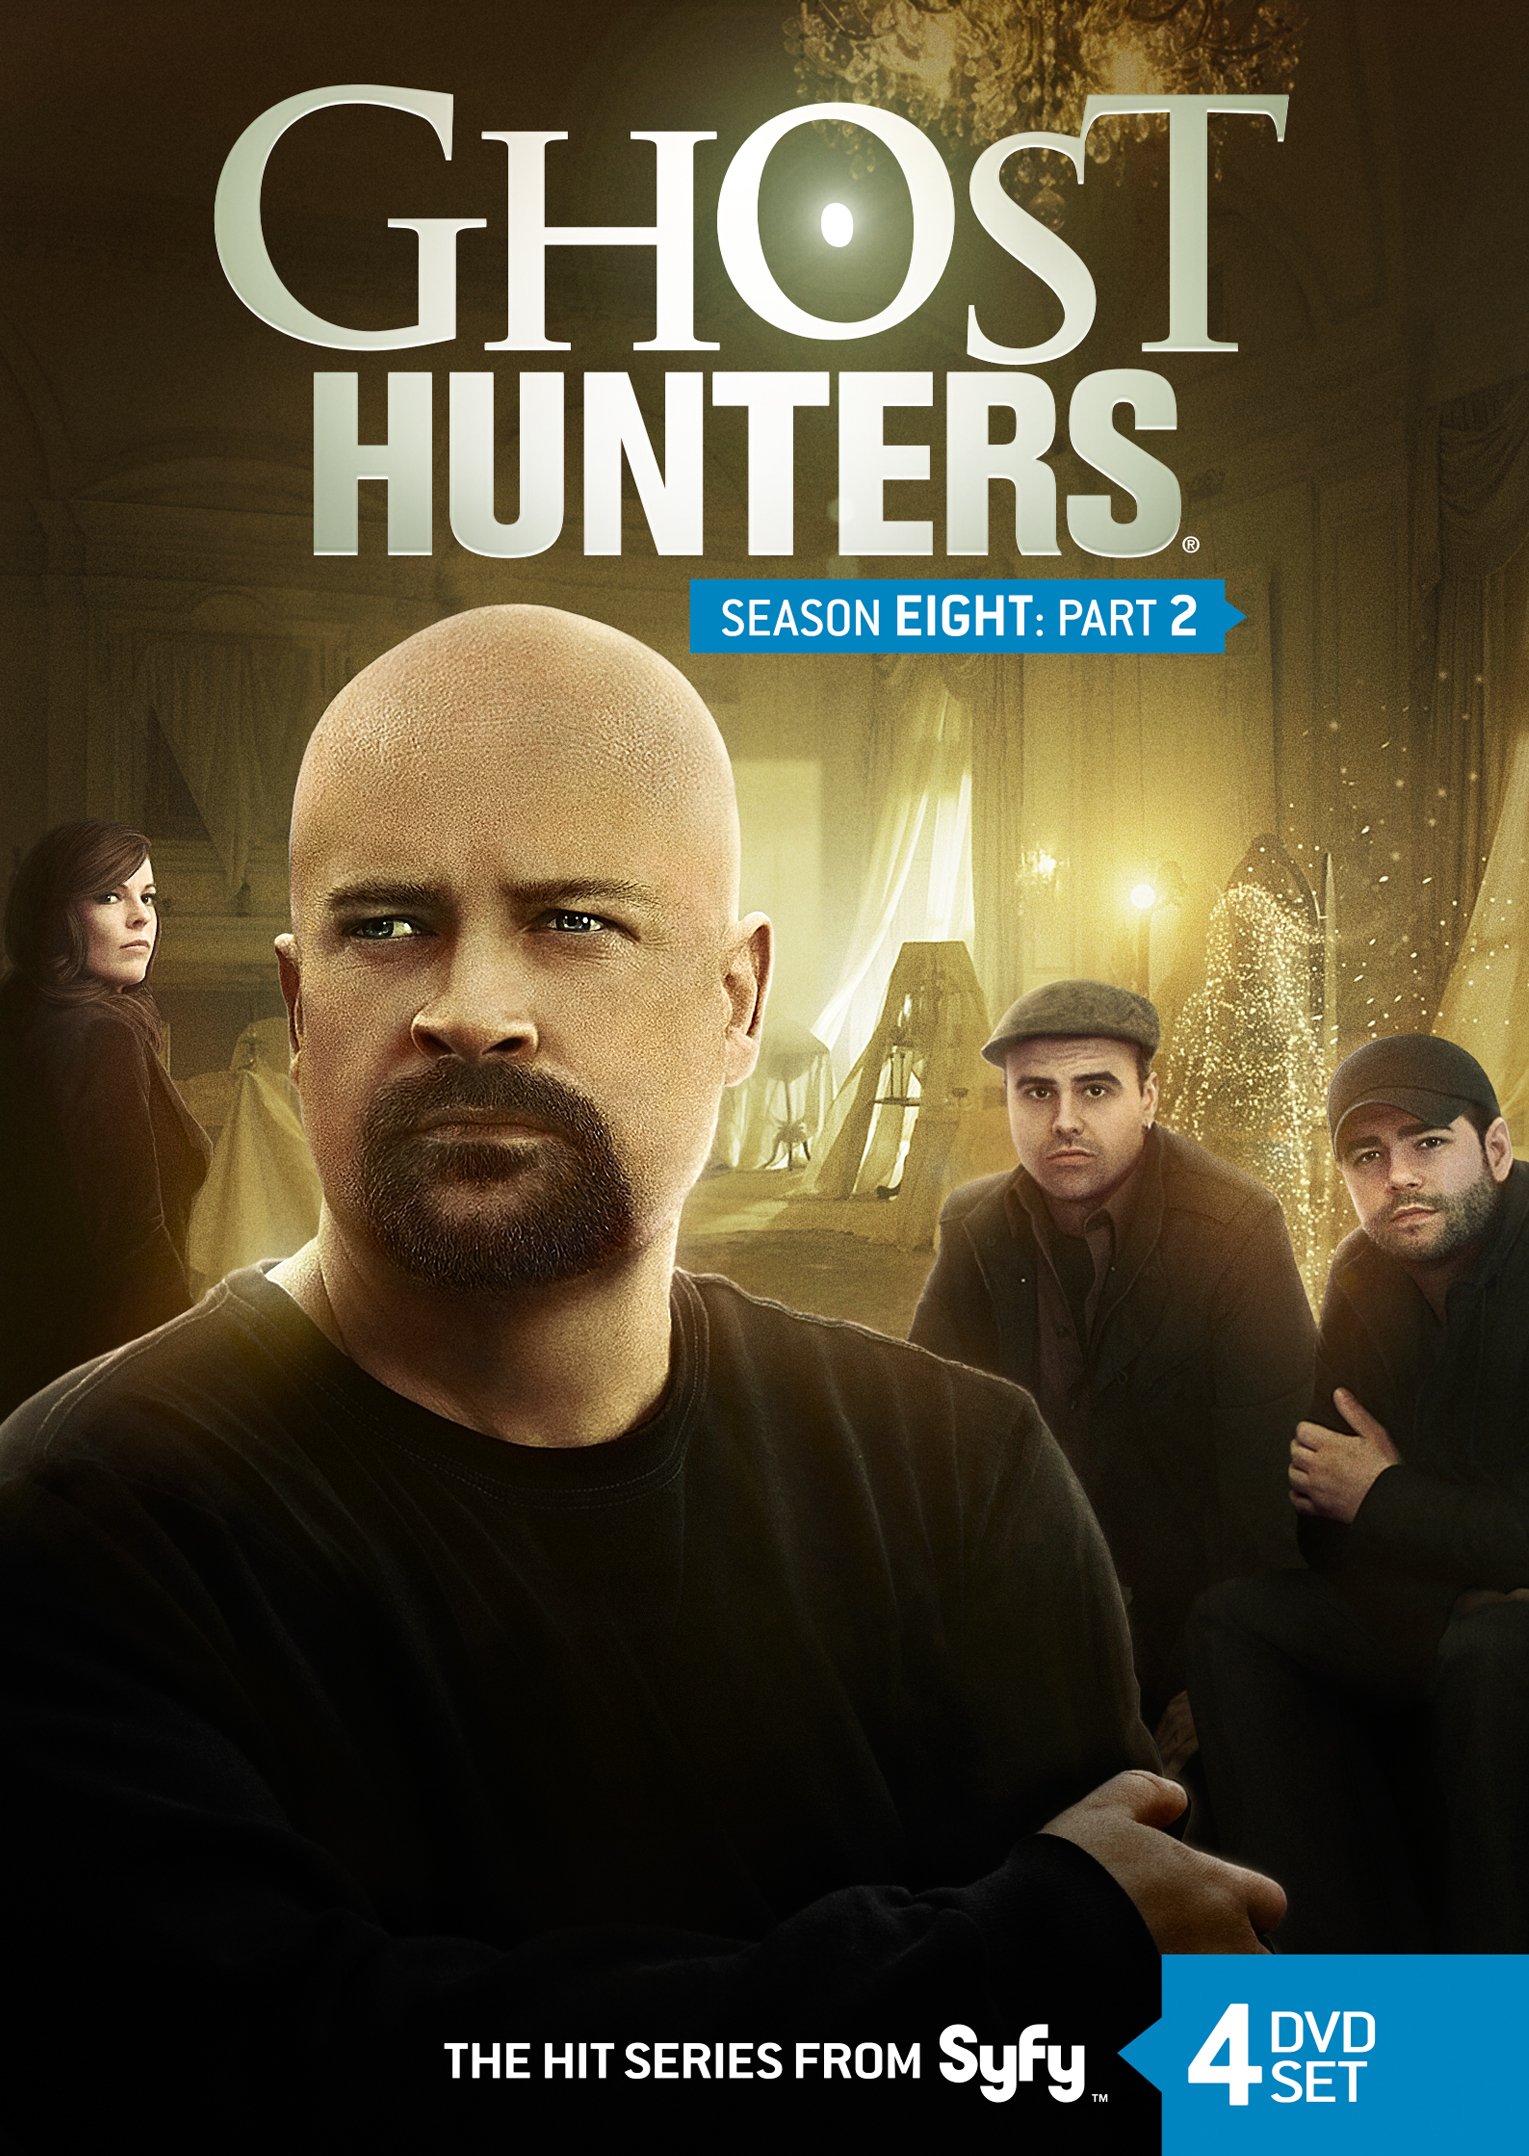 Ghost Hunters DVD Release Date